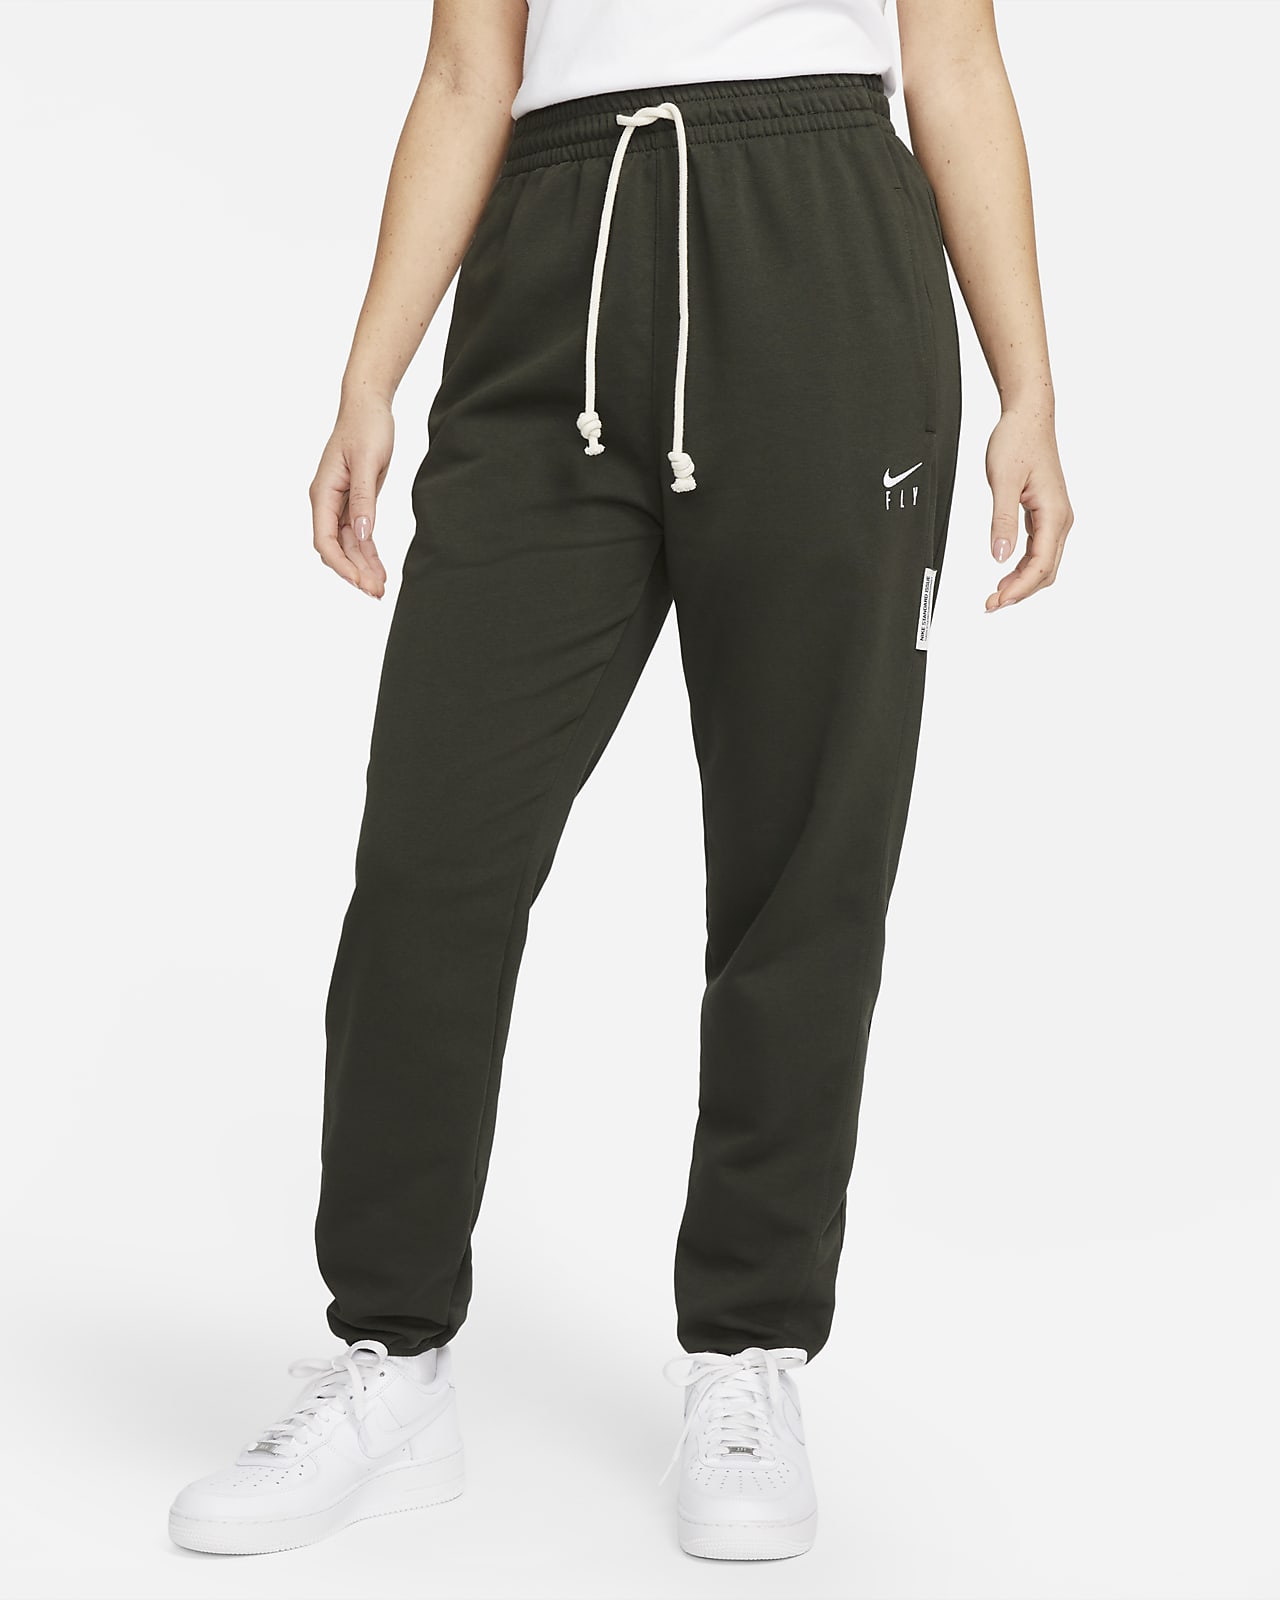 Nike Dri-FIT Swoosh Fly Standard Issue Women's Basketball Pants